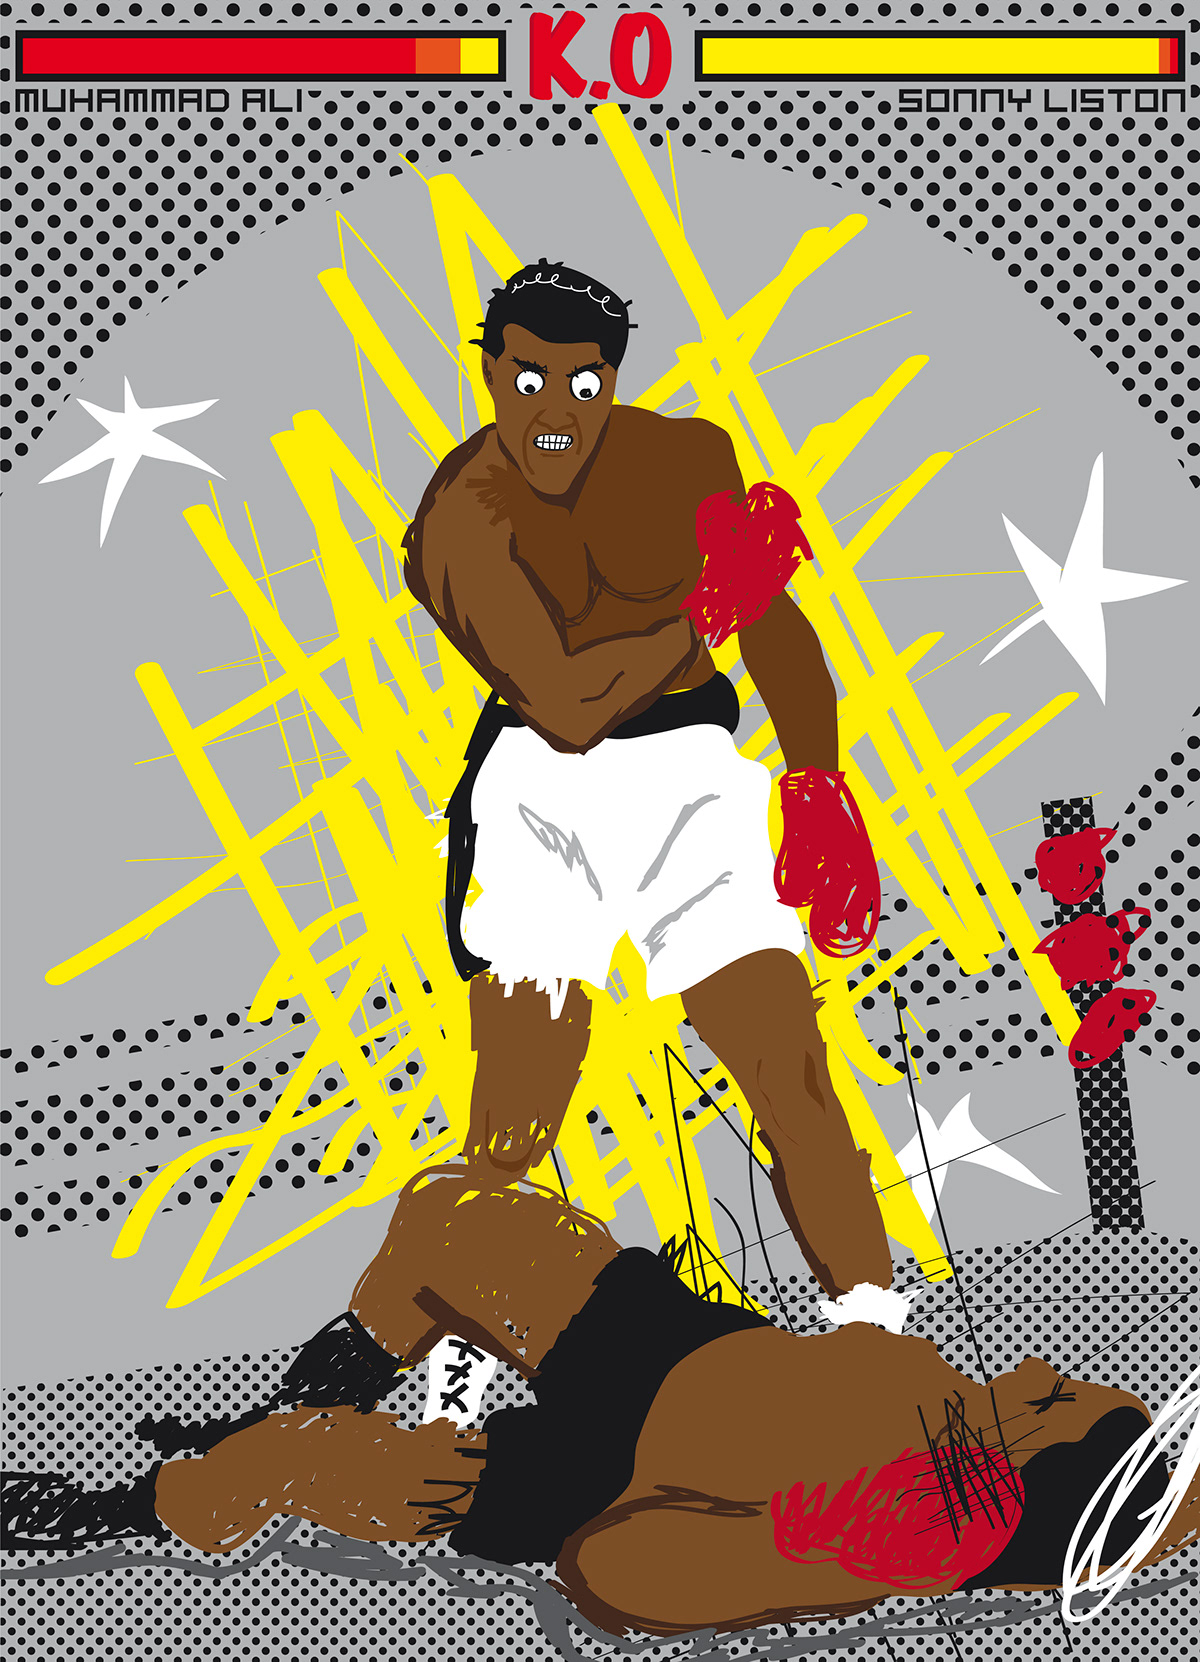 ali Boxe Boxing K.O fight sonny liston Muhammad Picture champion